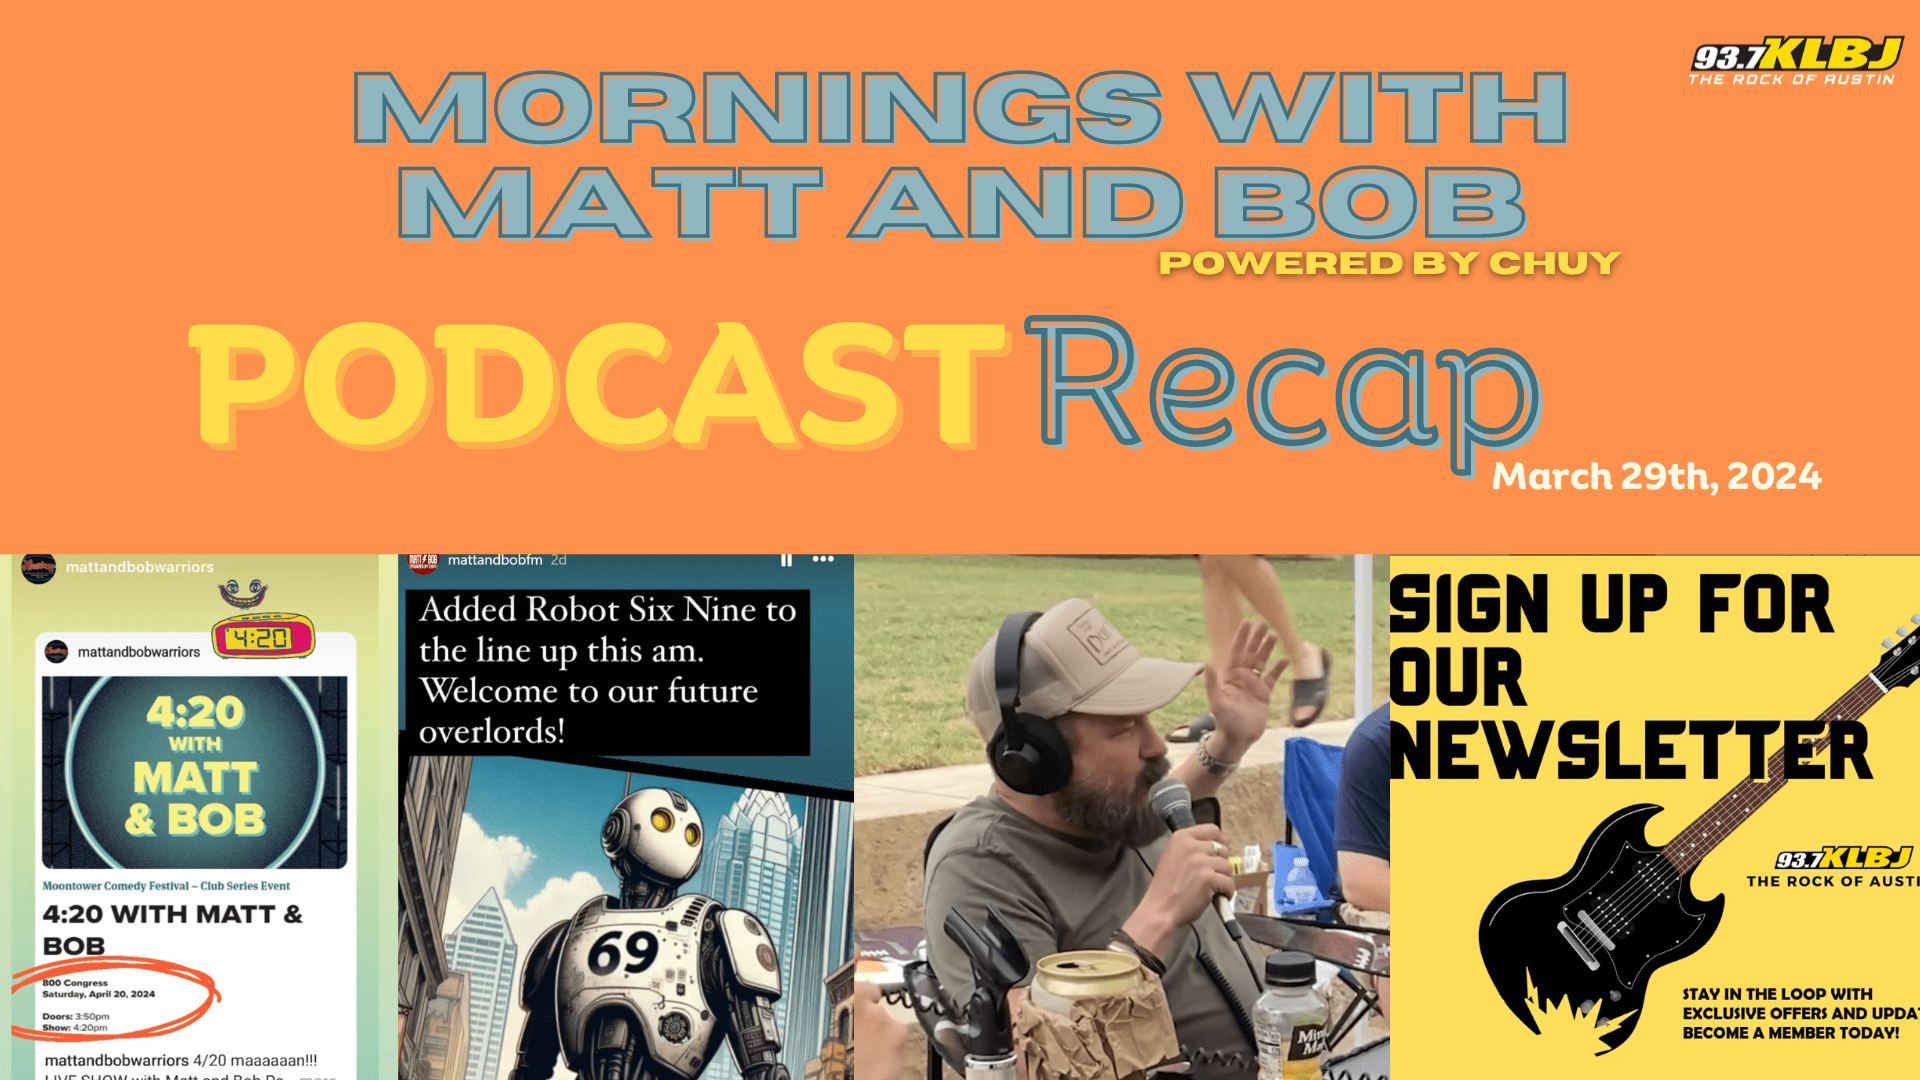 header image reads "Mornings with Matt and Bob Podcast Recap 3/29"